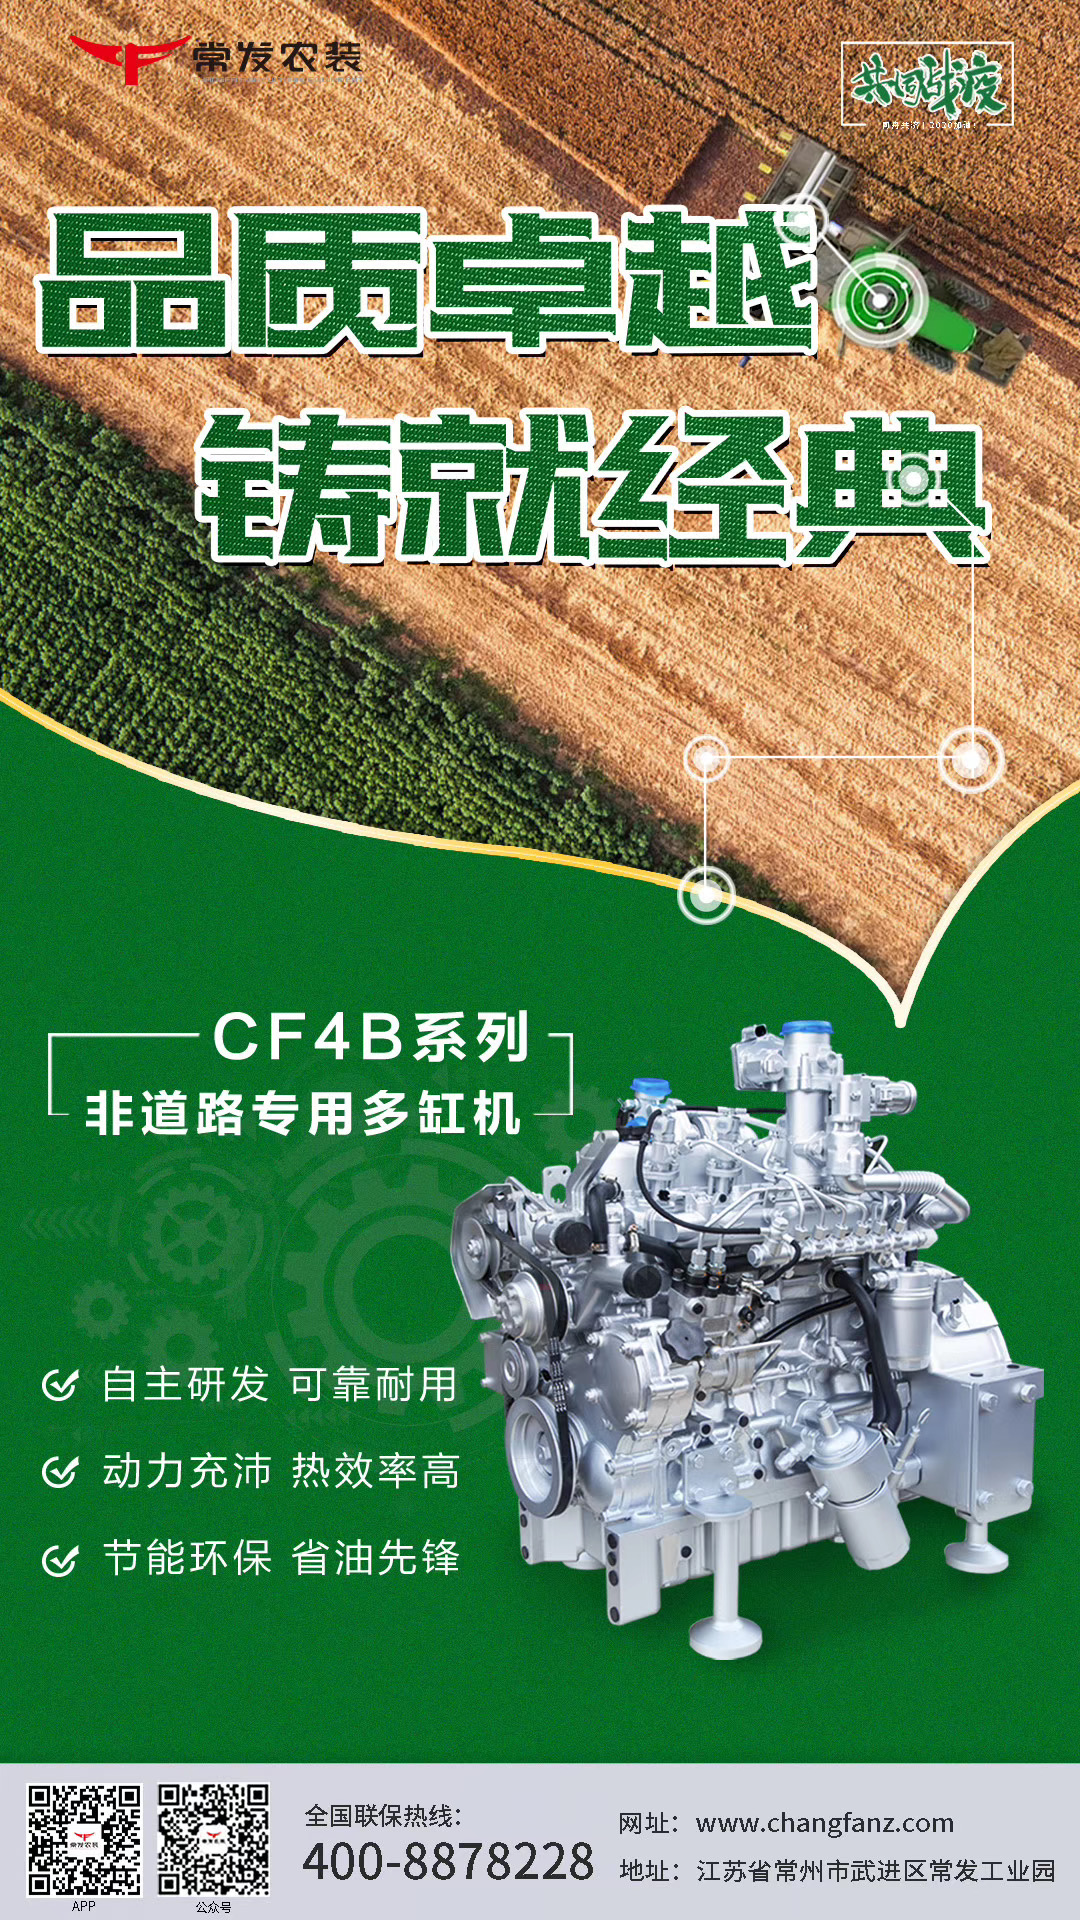 CF4B系列非道路专用多缸机.jpg